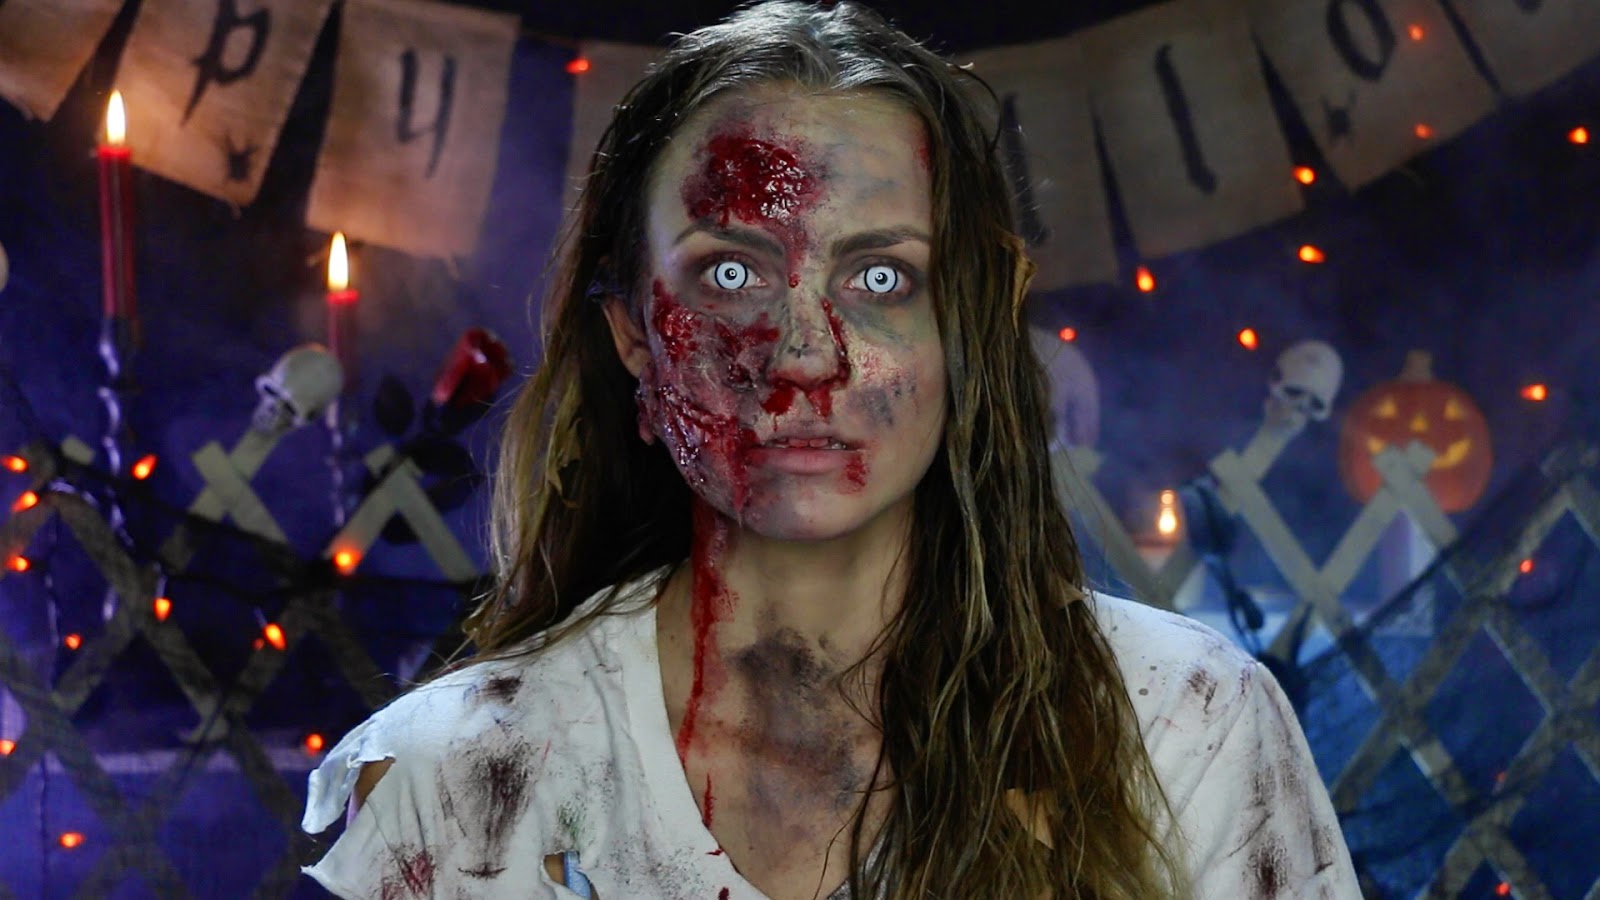 VIDEO Walking Dead Zombie Walker Makeup Tutorial Hello Gorgeous